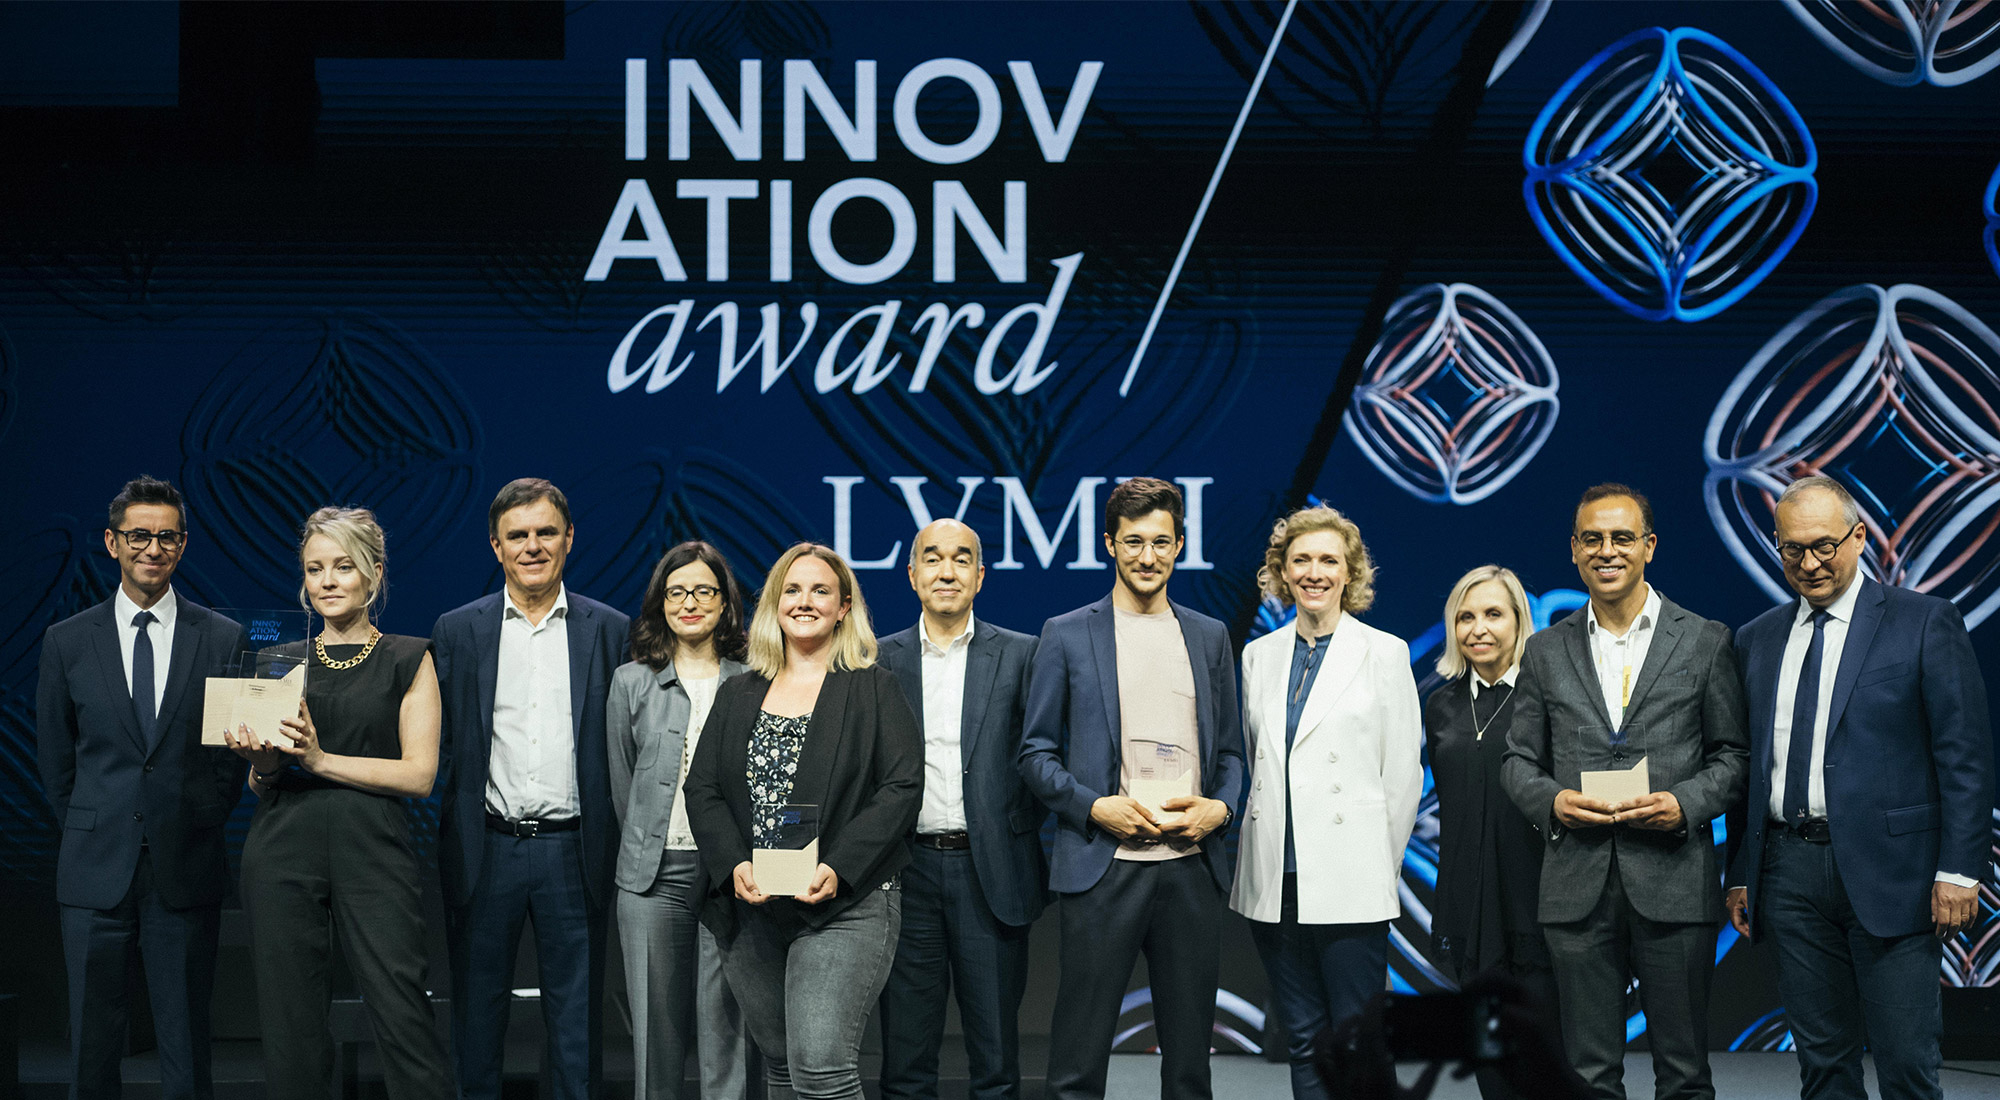 LVMH Innovation Award 2020 awarded to Dutch company Crobox - Luxus Plus